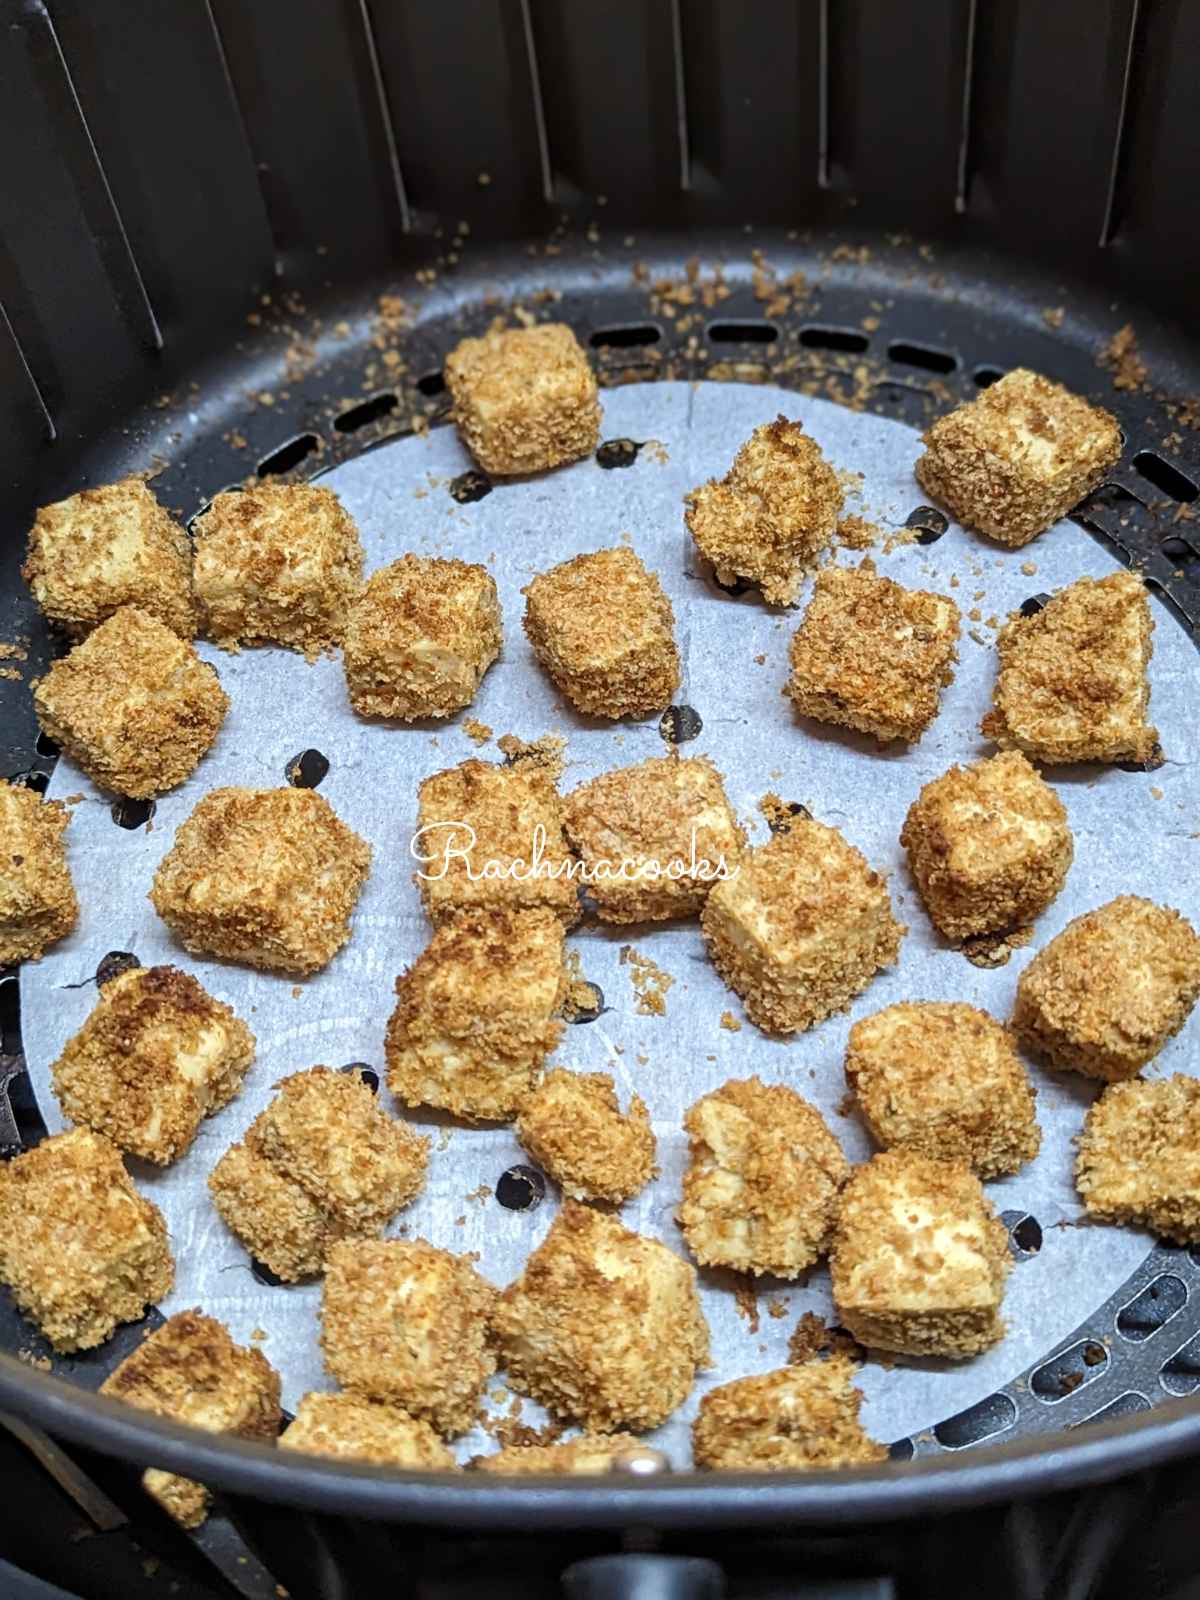 Crispy tofu after air frying in air fryer basket